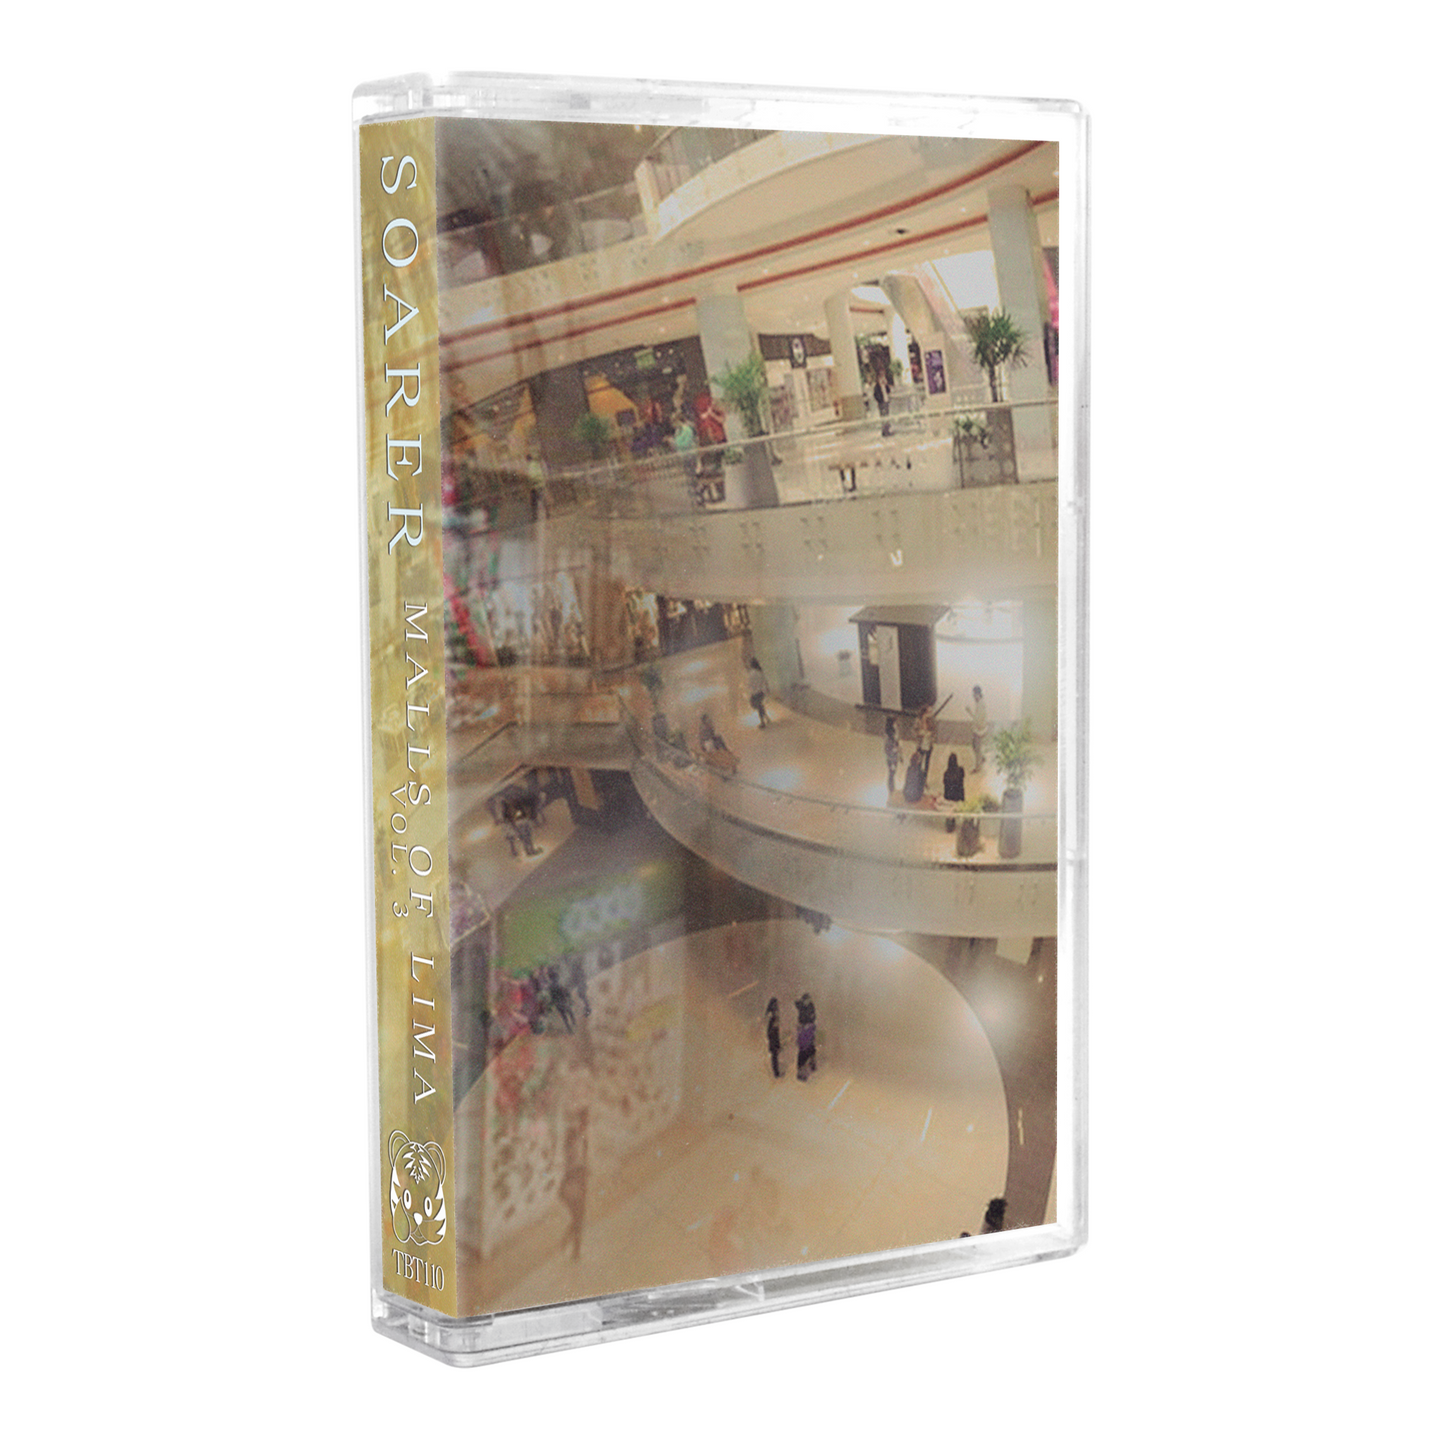 S O A R E R - "Malls of Lima Vol. 3" Limited Edition Cassette Tape